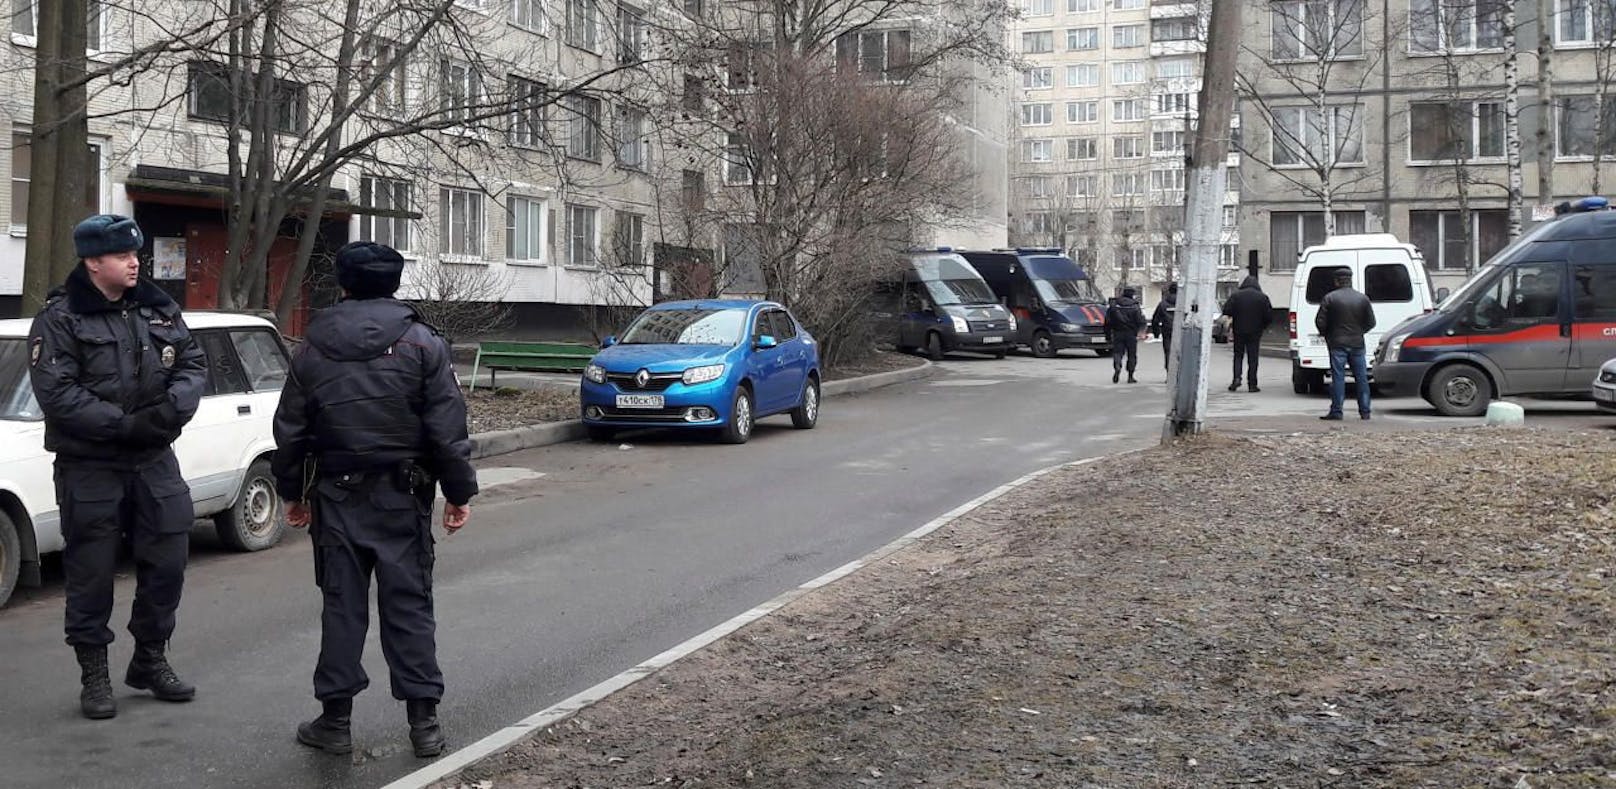 Bombe bei Razzia in St. Petersburg gefunden